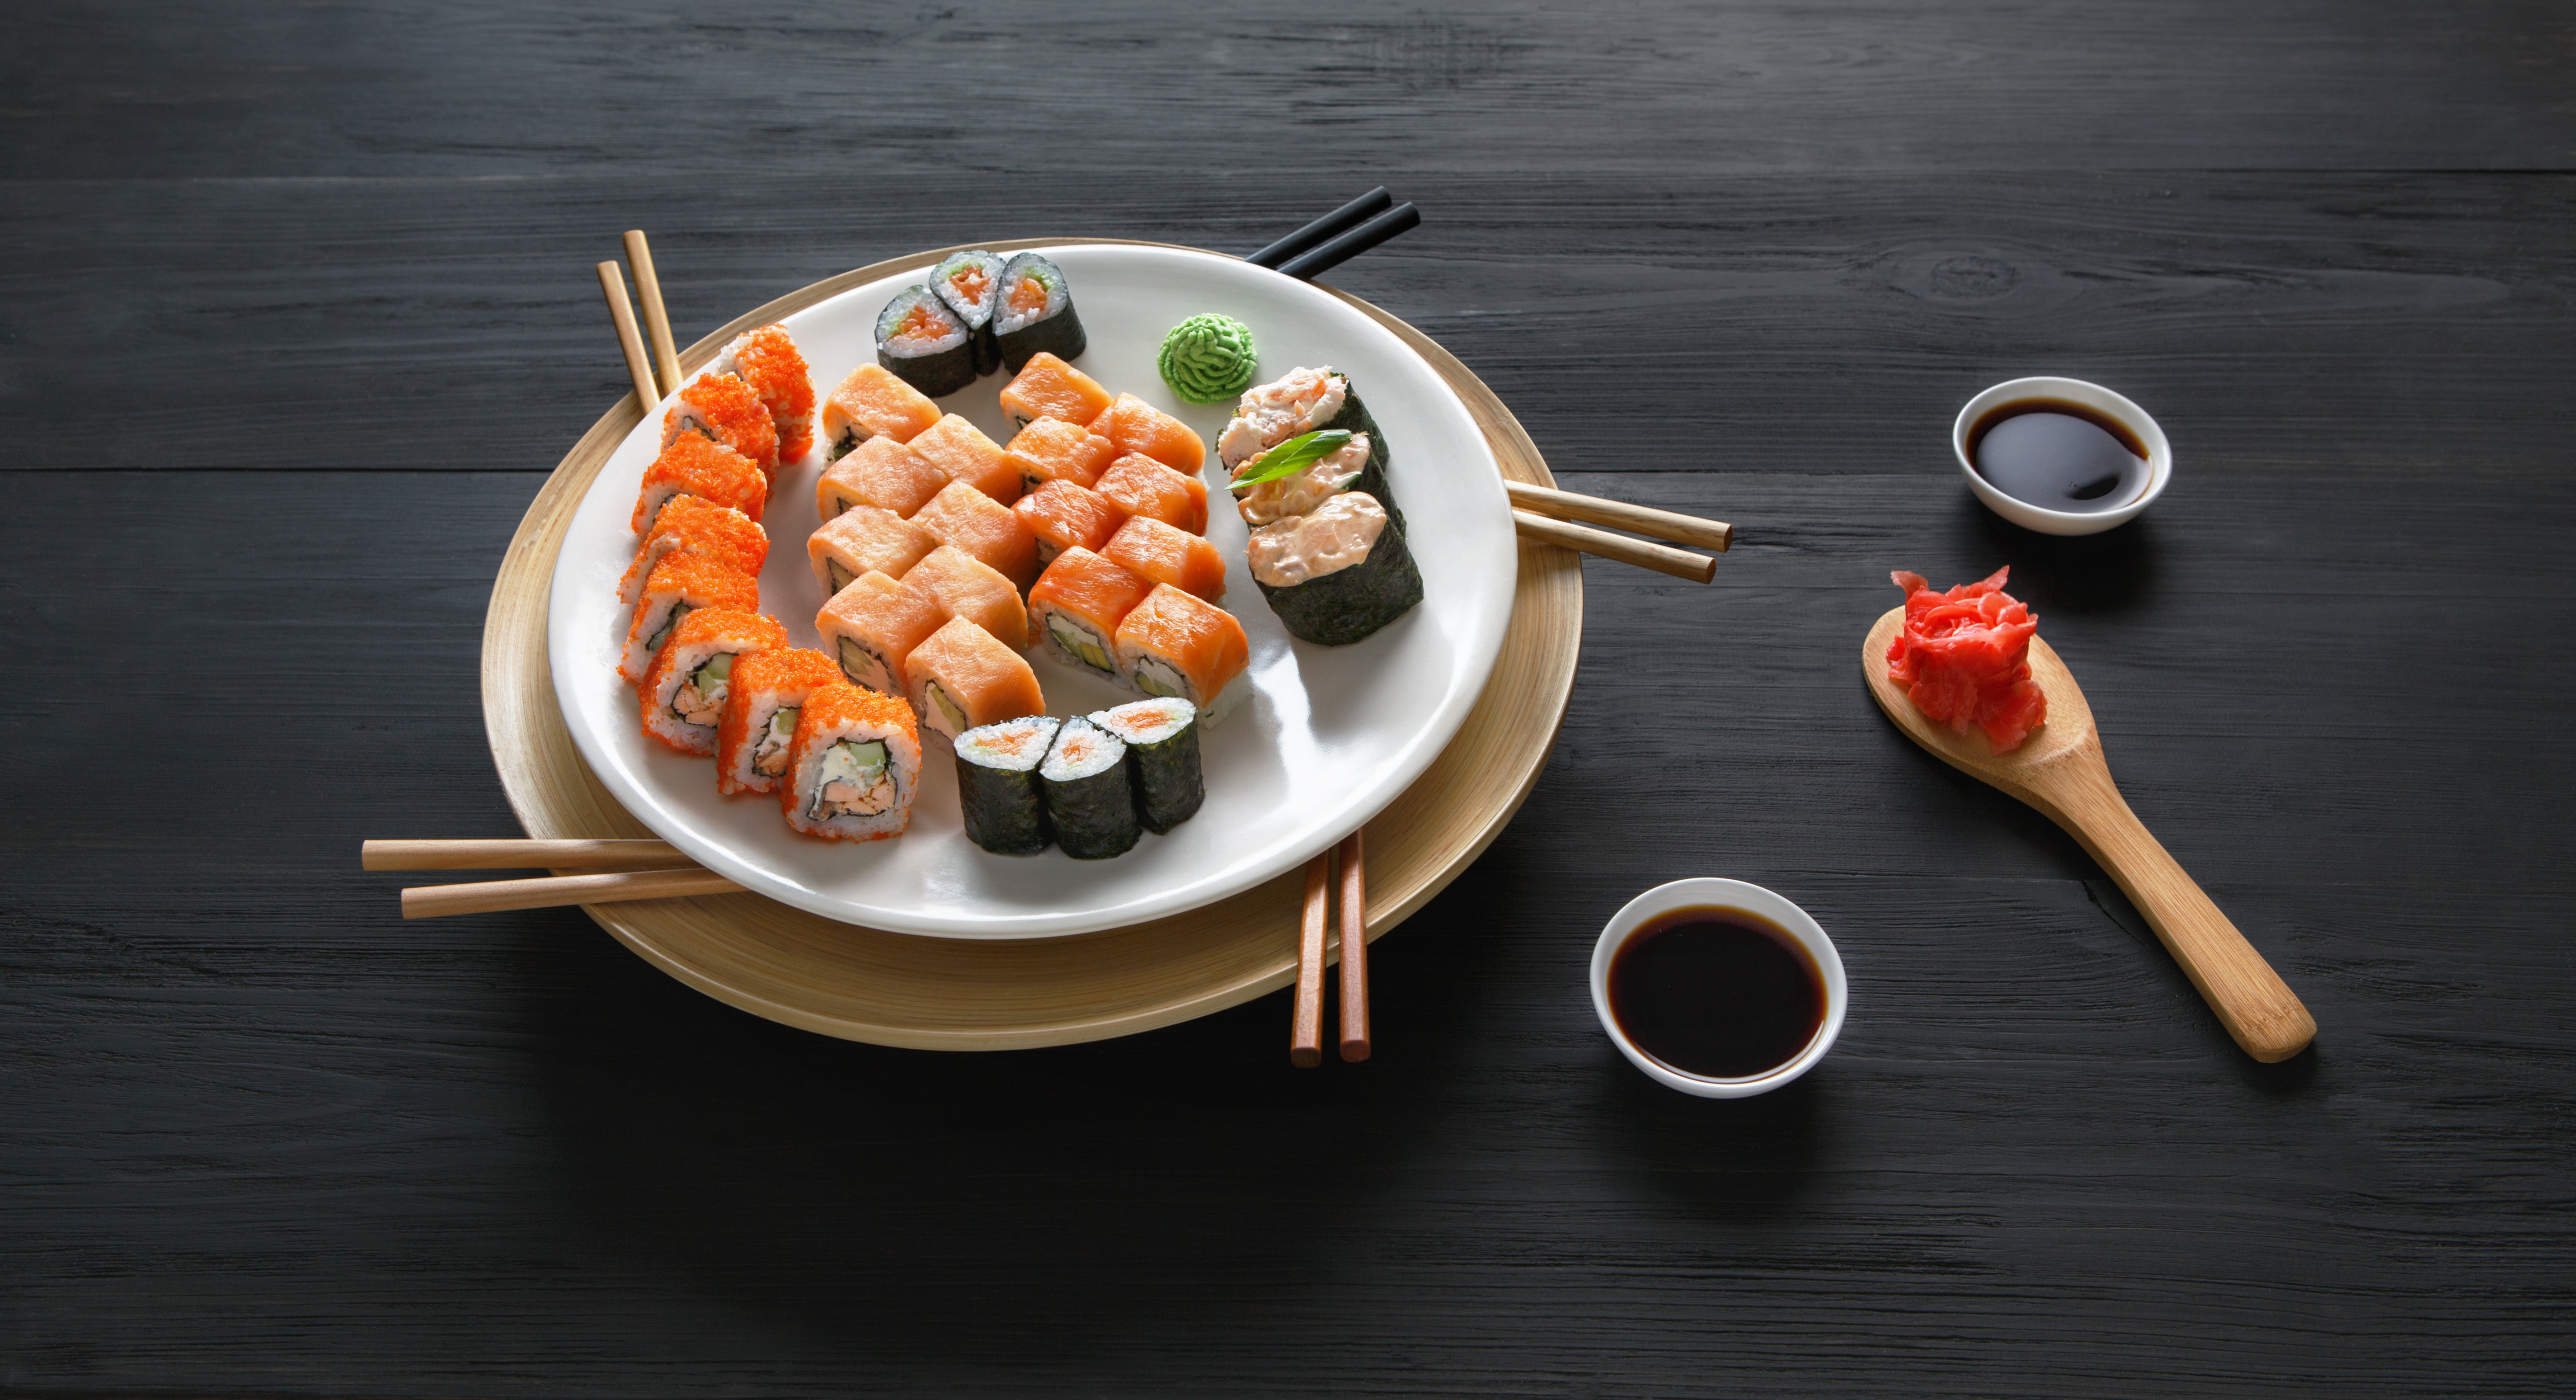 873359 descargar imagen alimento, sushi, pez, arroz, marisco, bodegón: fondos de pantalla y protectores de pantalla gratis